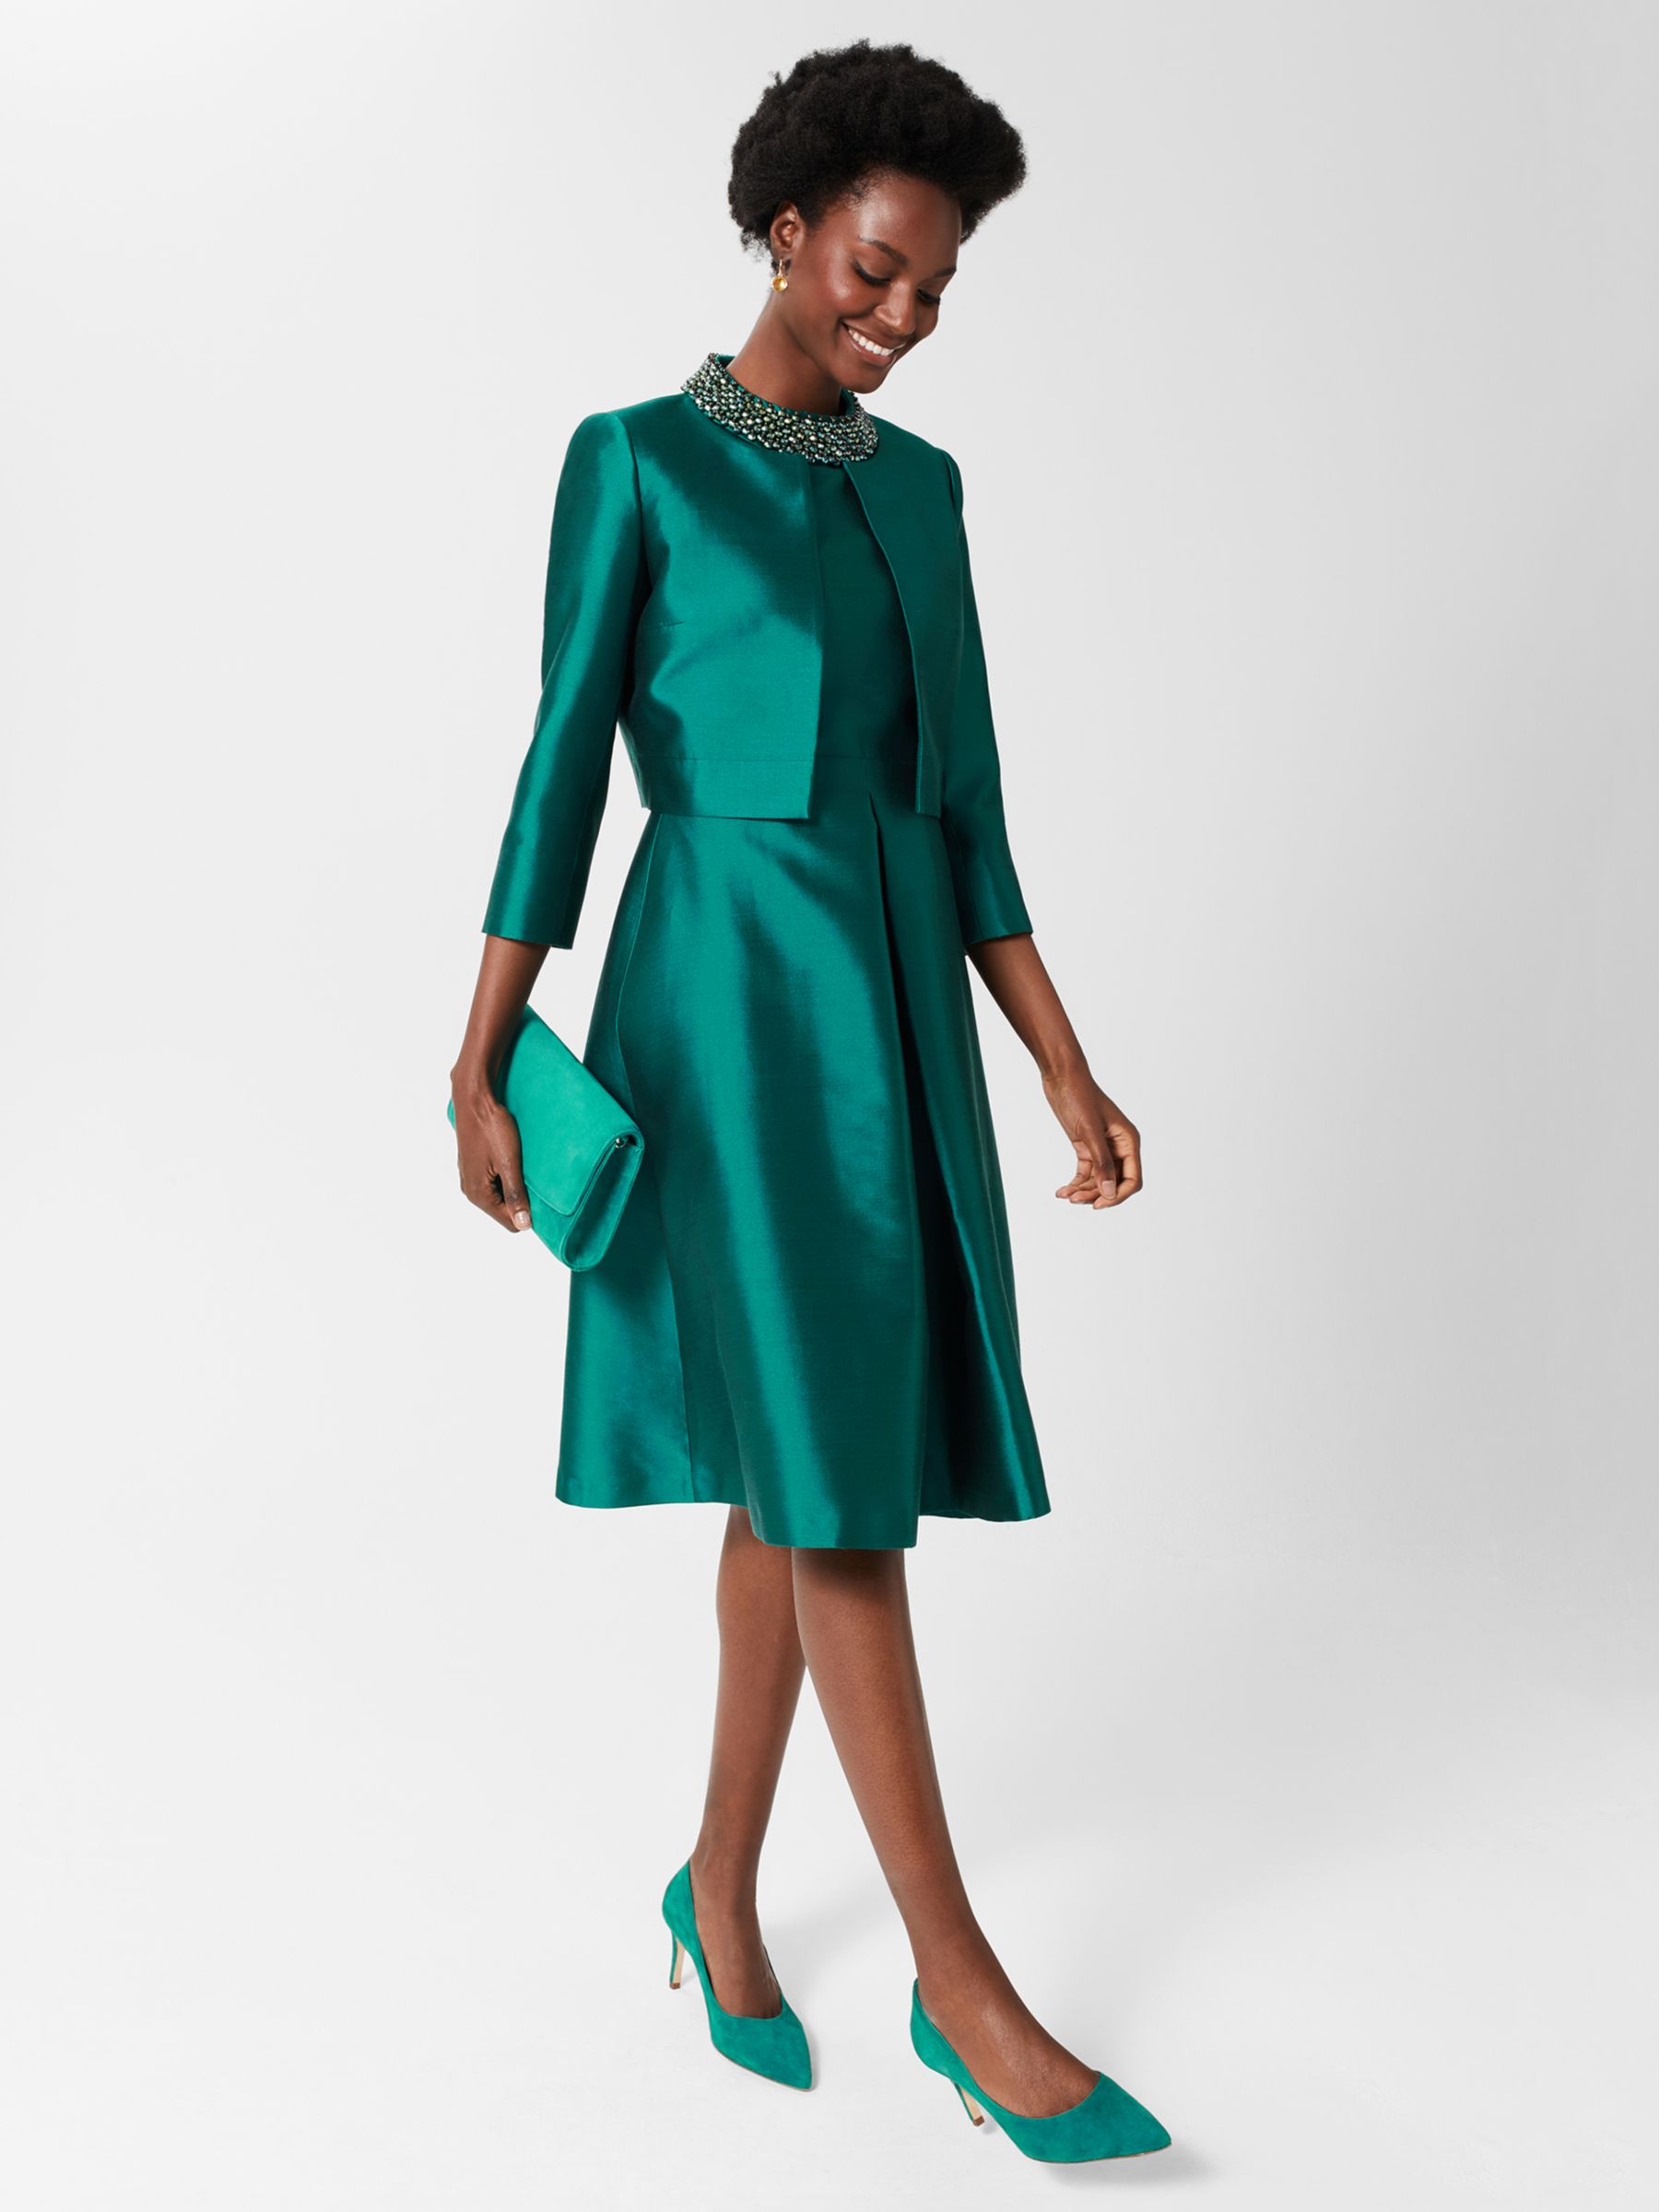 Hobbs Christie Embellished Neck Dress, Jewel Green at John Lewis & Partners